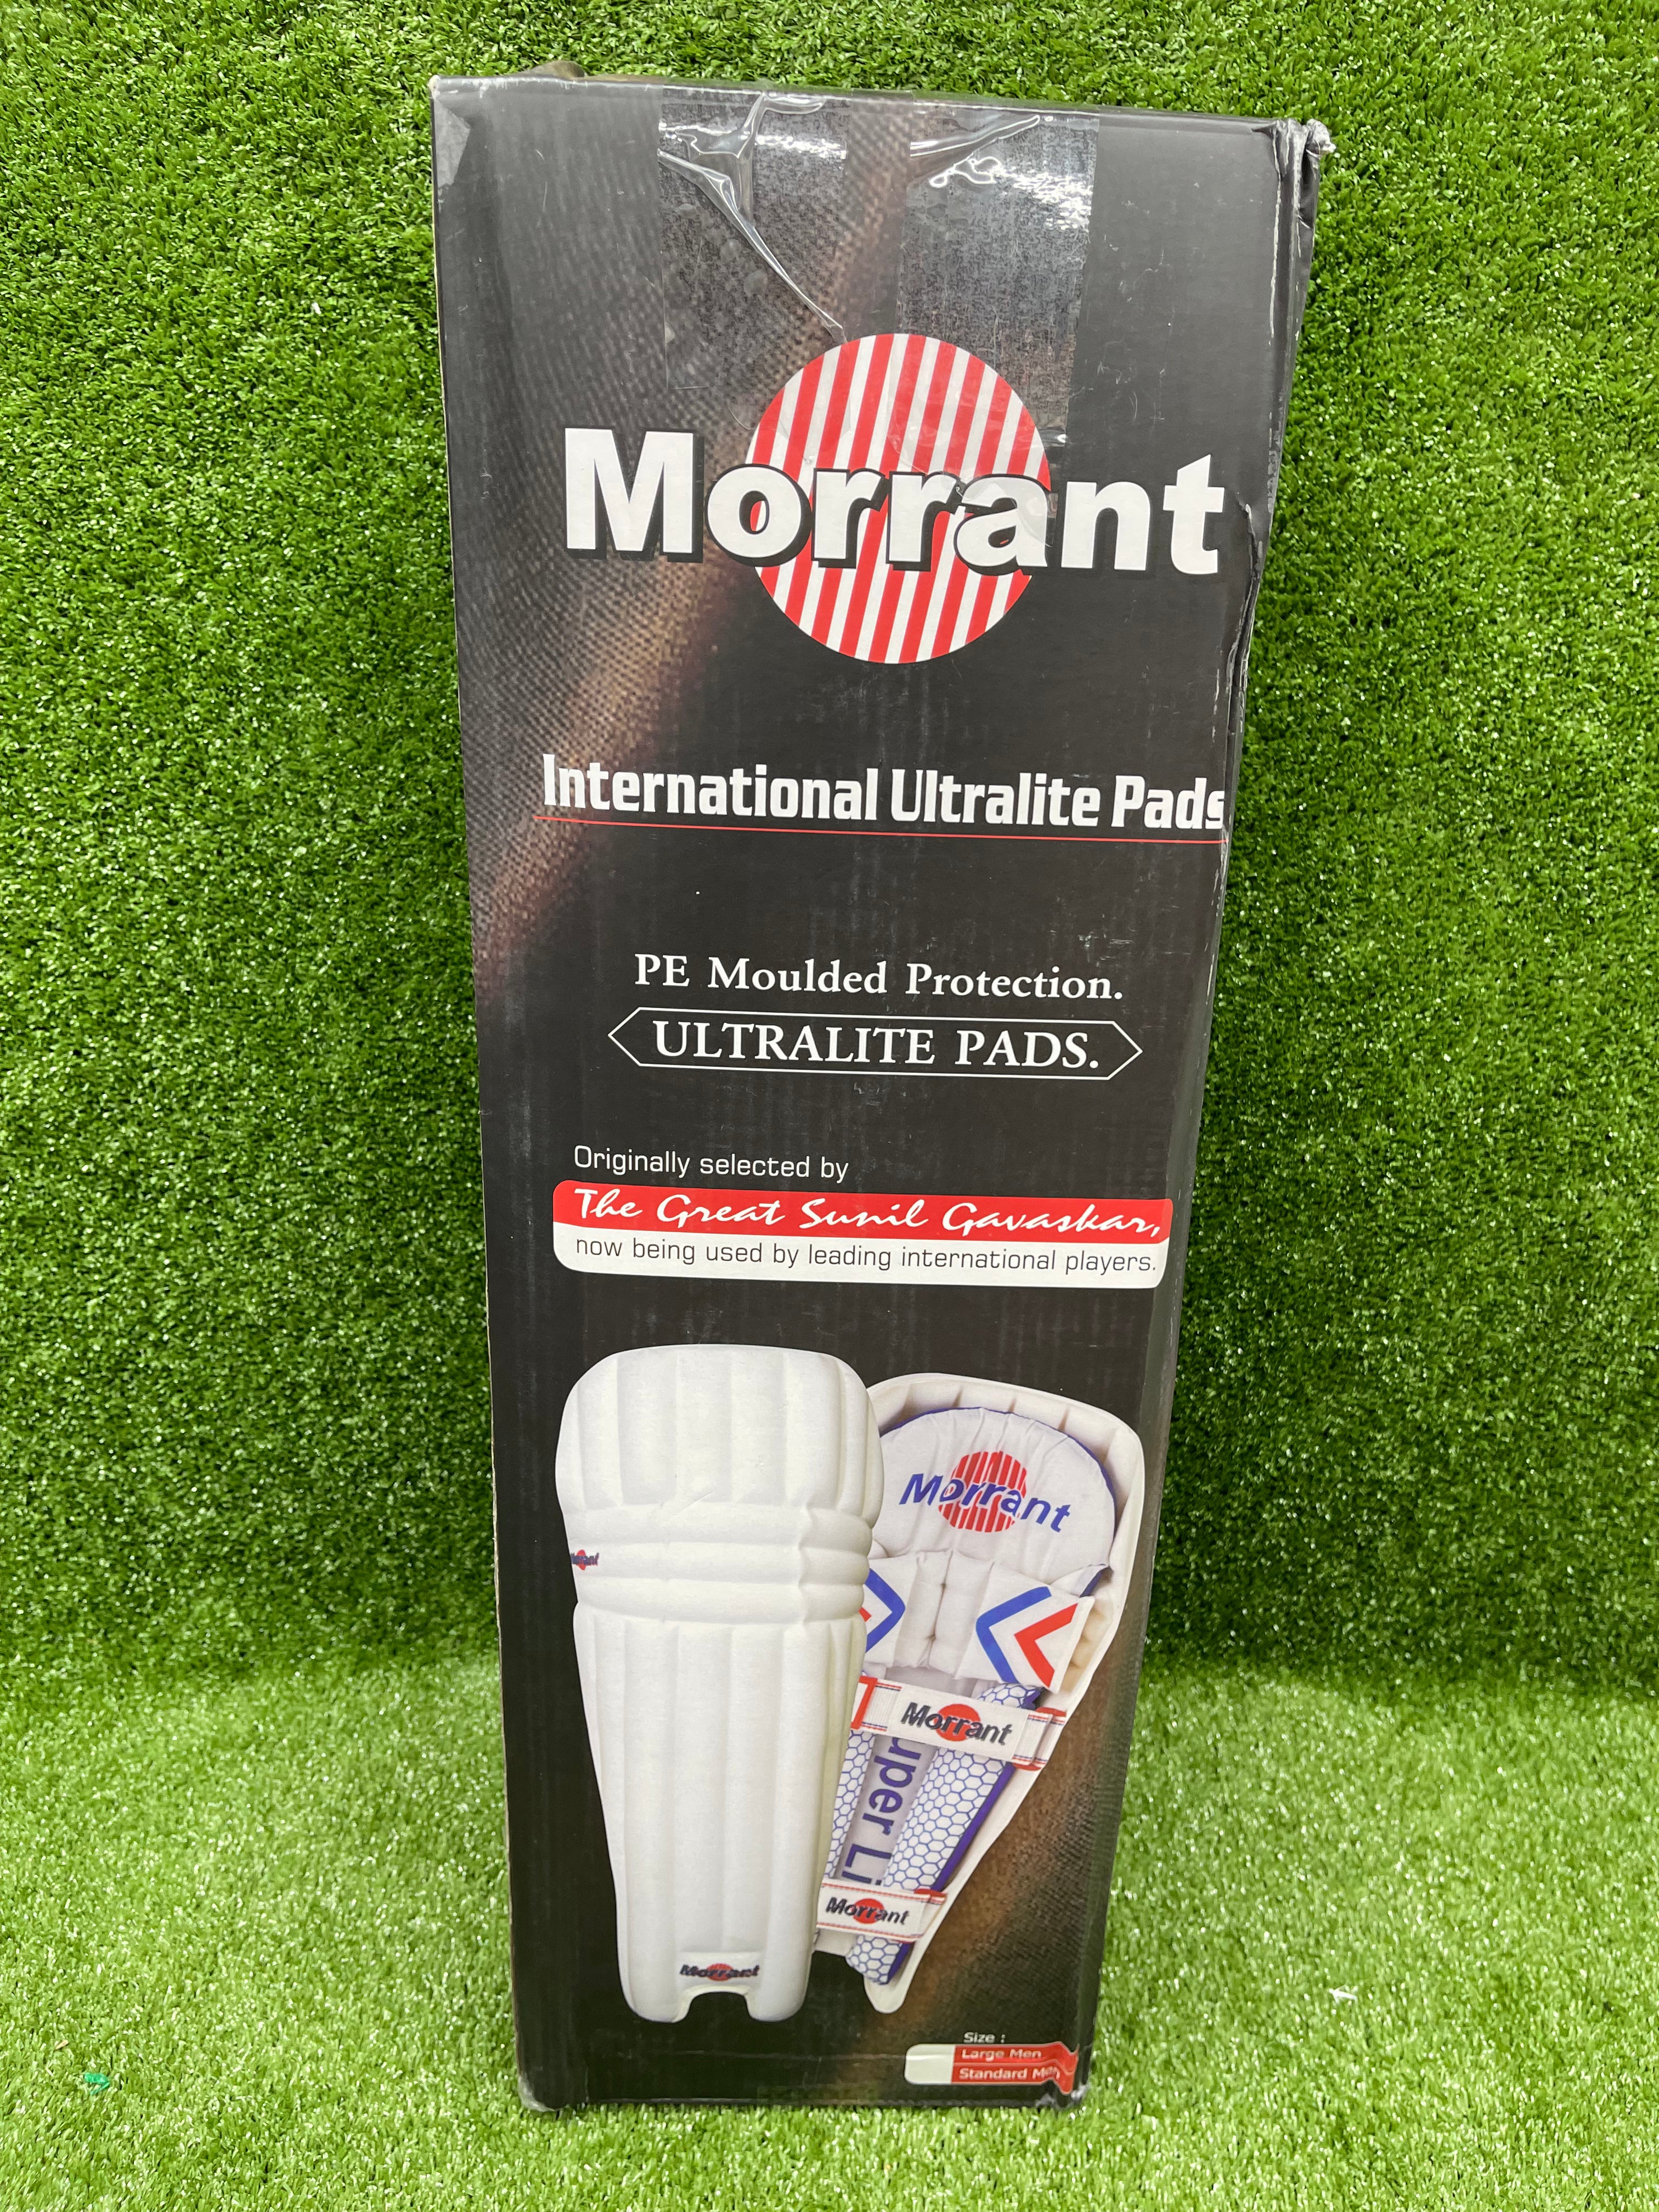 Morrant International Super Ultralite Junior / Youth Cricket Batting Pads